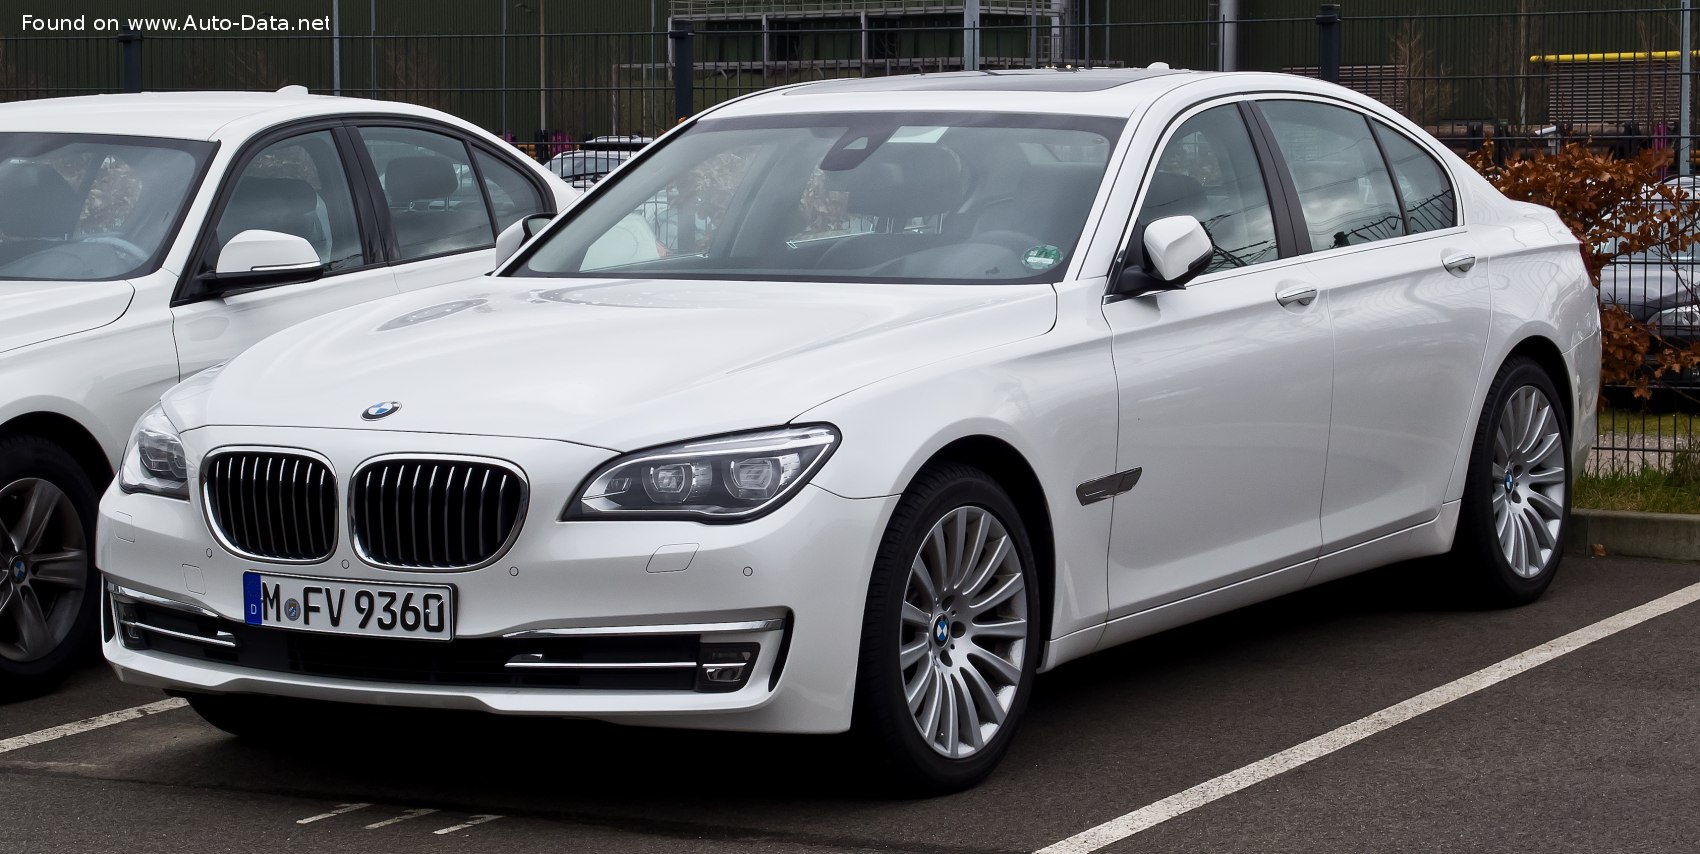 https://www.auto-data.net/images/f108/BMW-7-Series-F01-LCI-facelift-2012.jpg